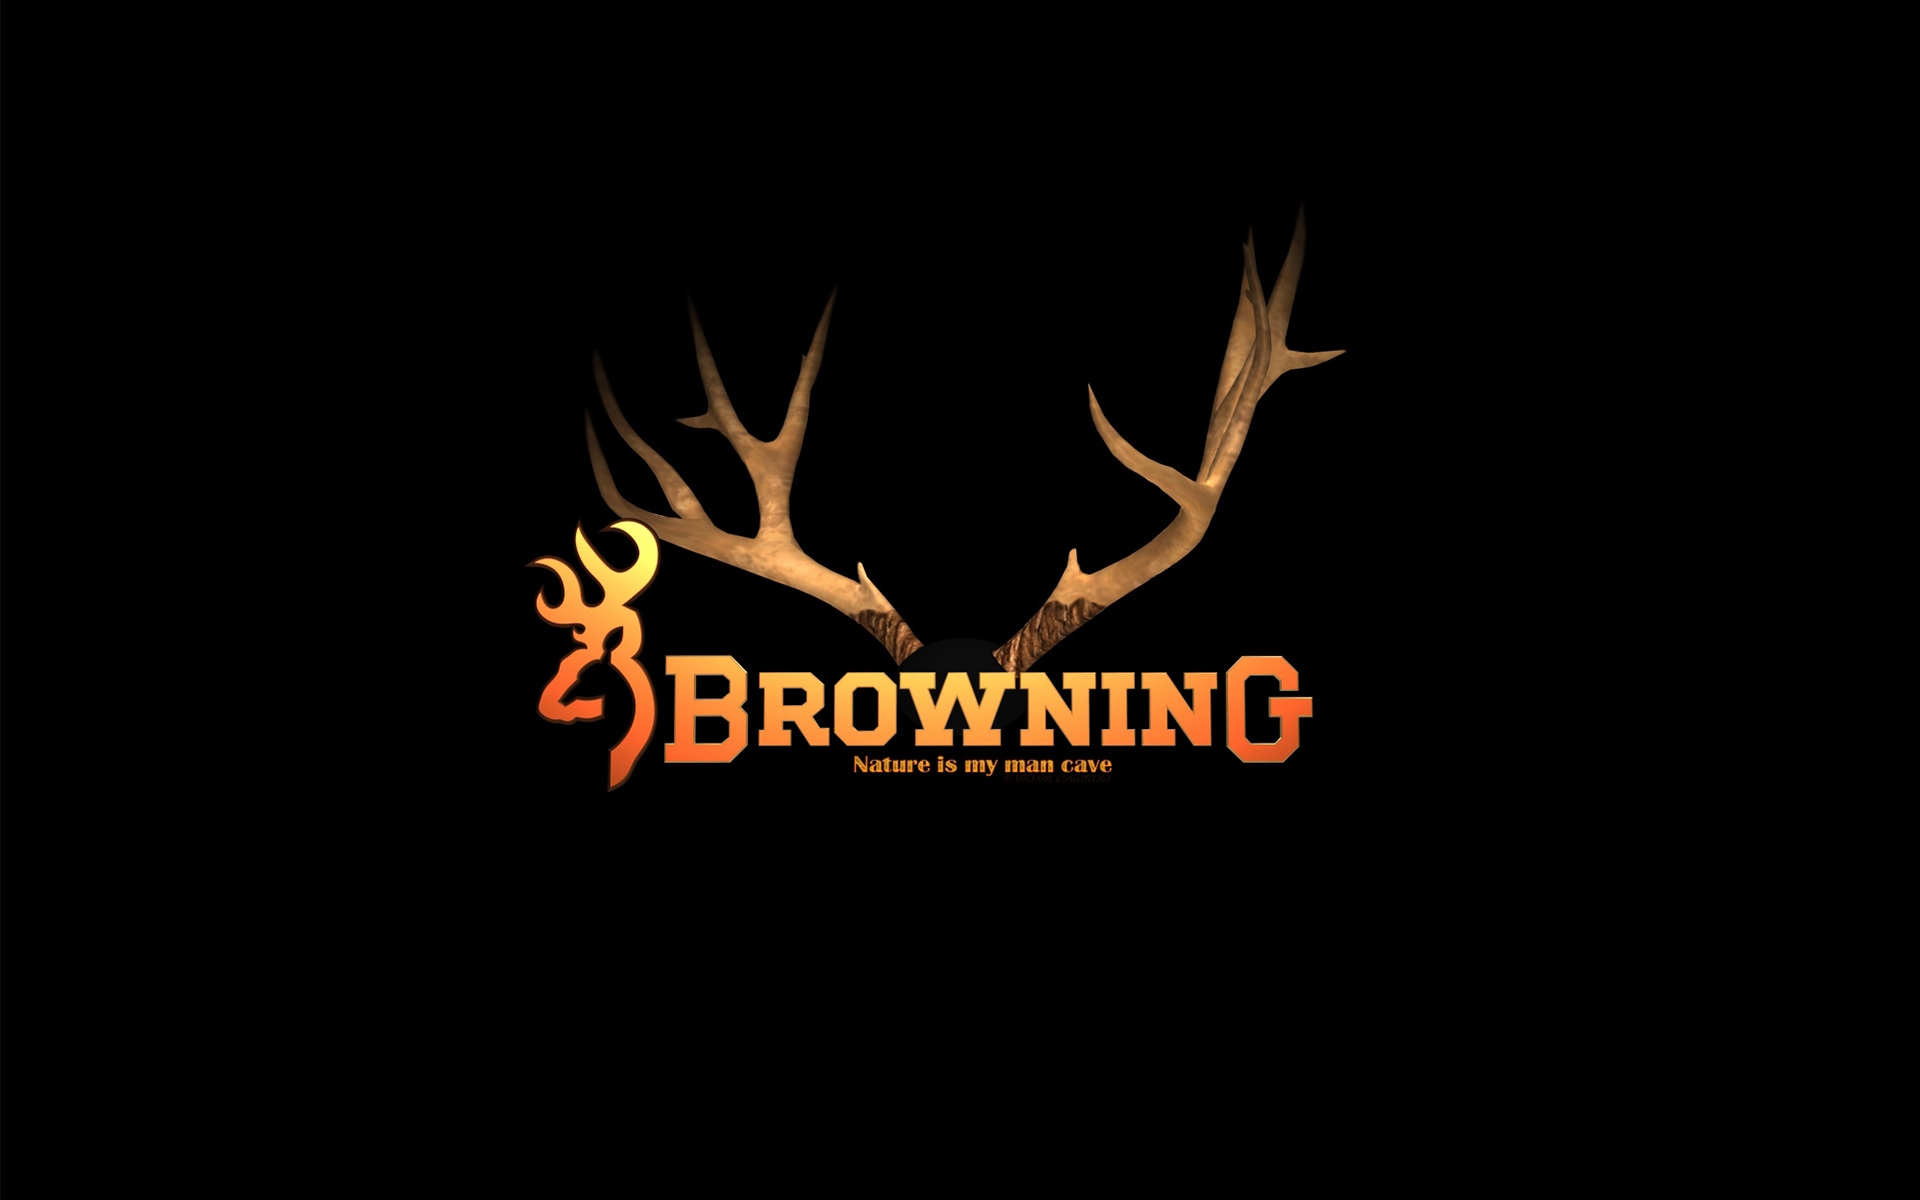 Browning Logo Desktop Wallpaper Images Pictures   Becuo 1920x1200